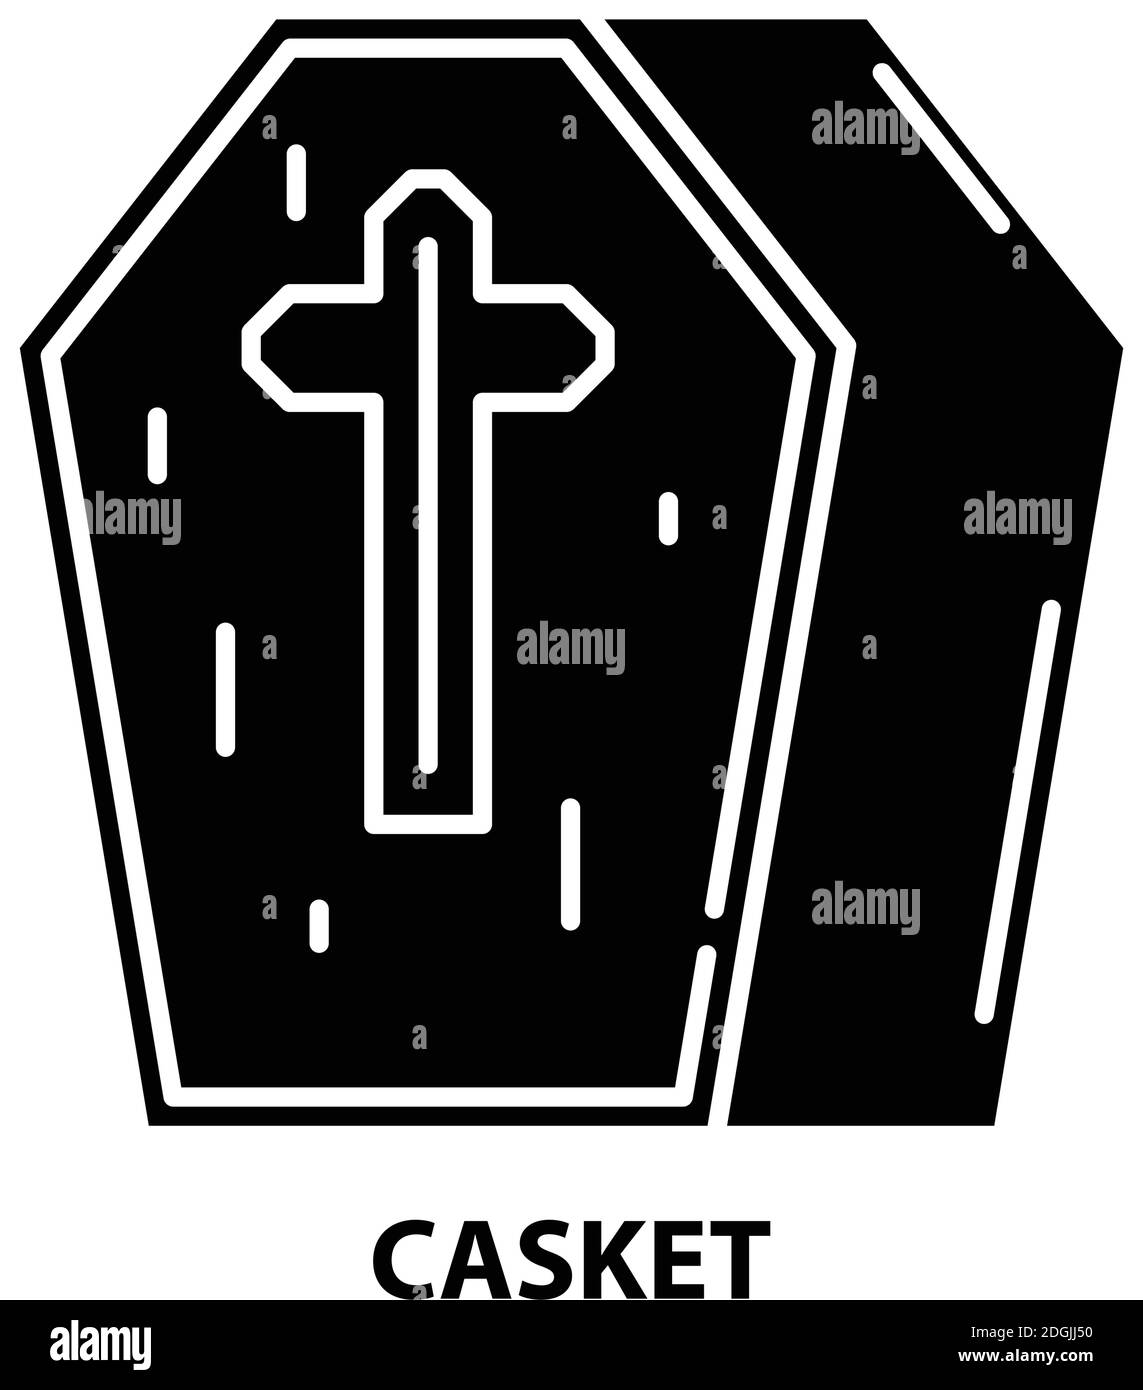 casket icon, black vector sign with editable strokes, concept illustration Stock Vector